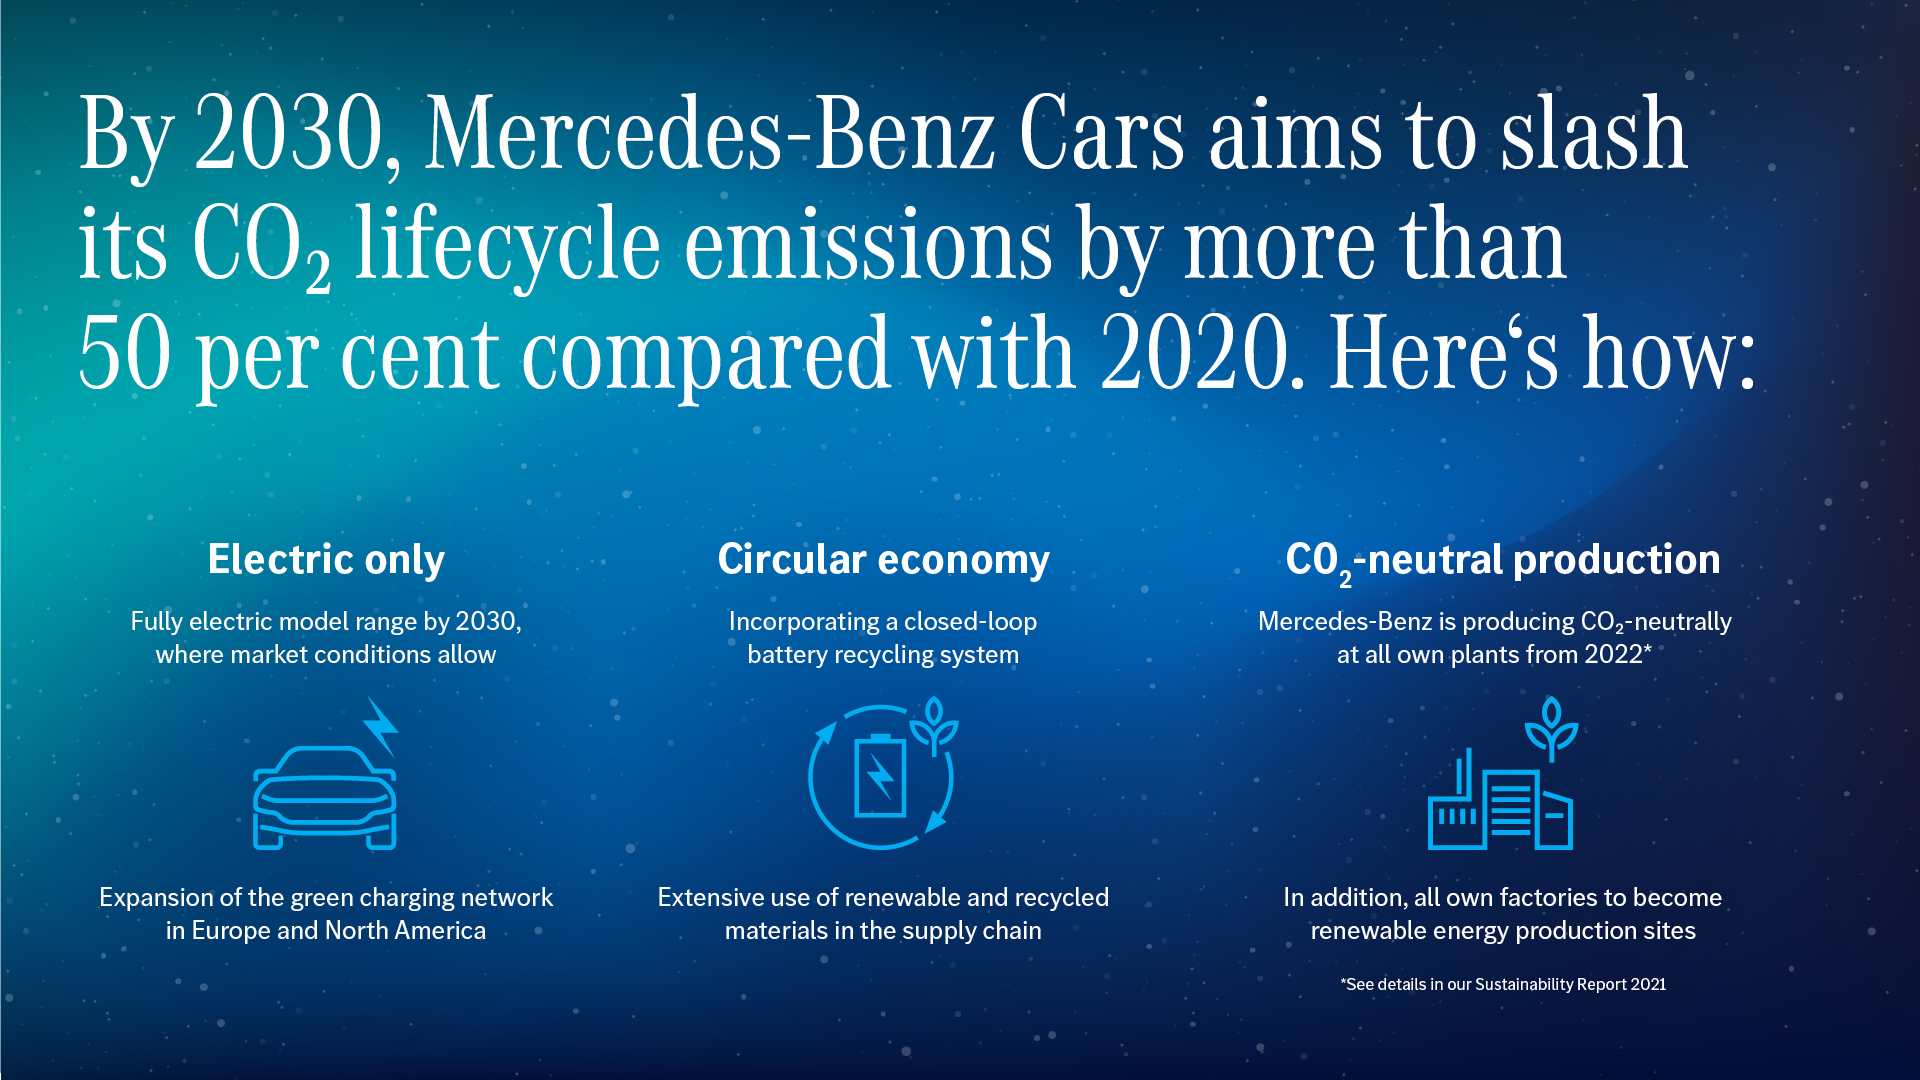 Estrategia de Mercedes-Benz para reducir emisiones de CO2